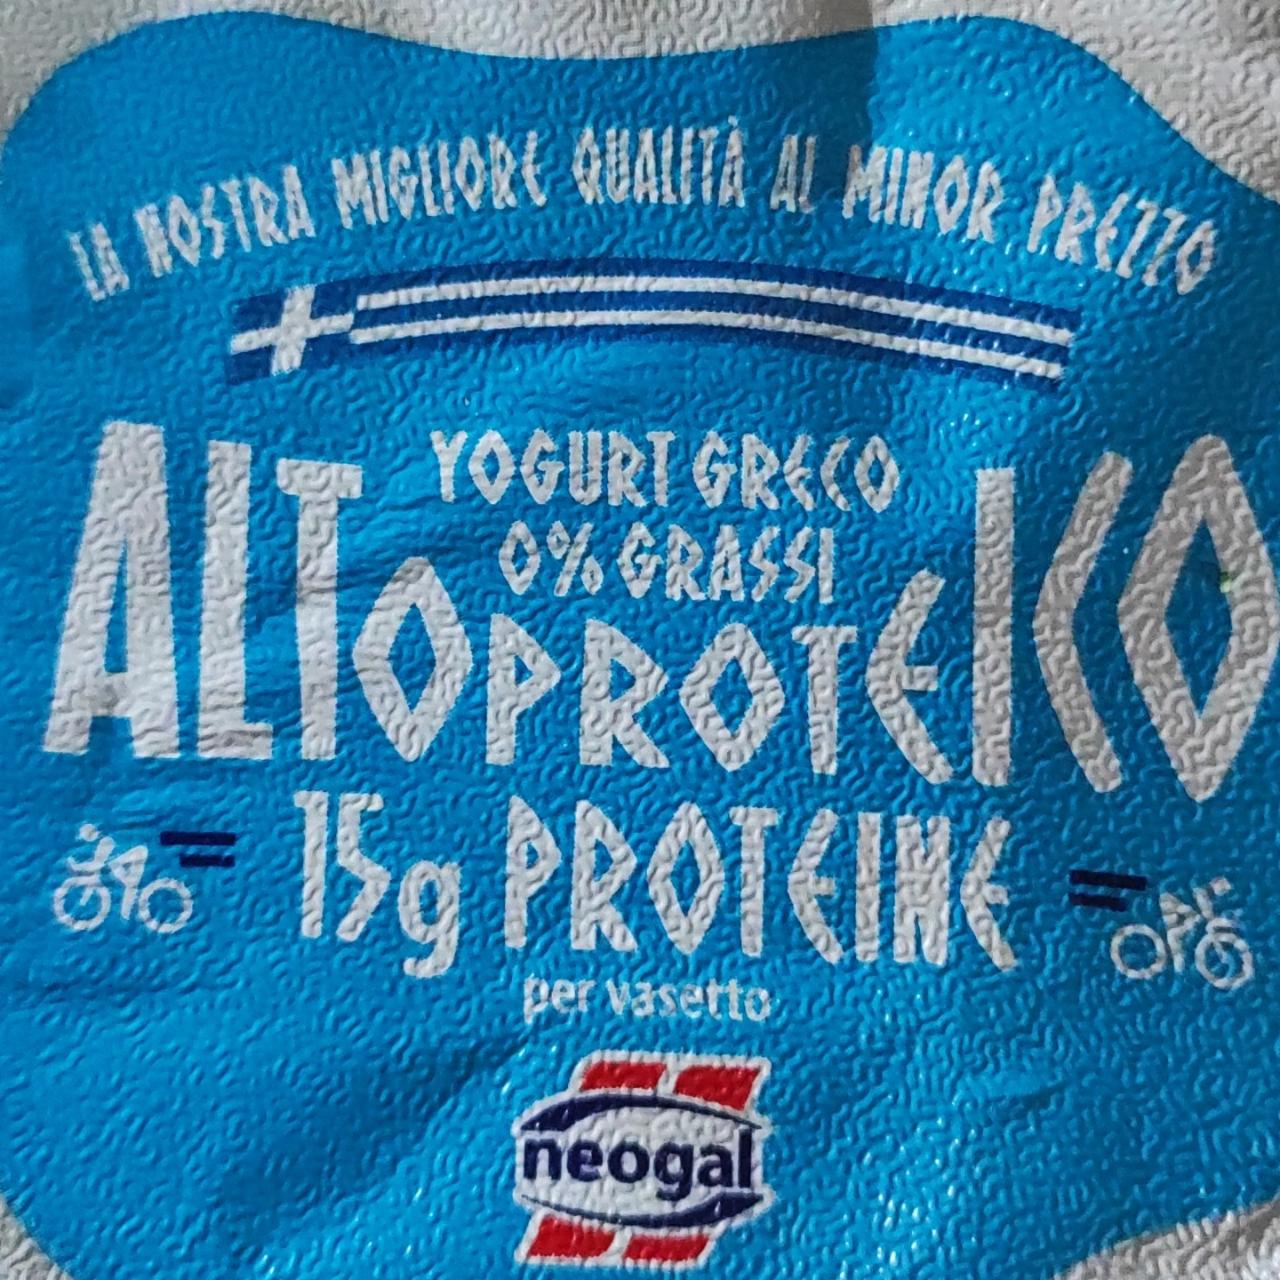 Fotografie - Yogurt greco altoproteico 15g proteine Neogal